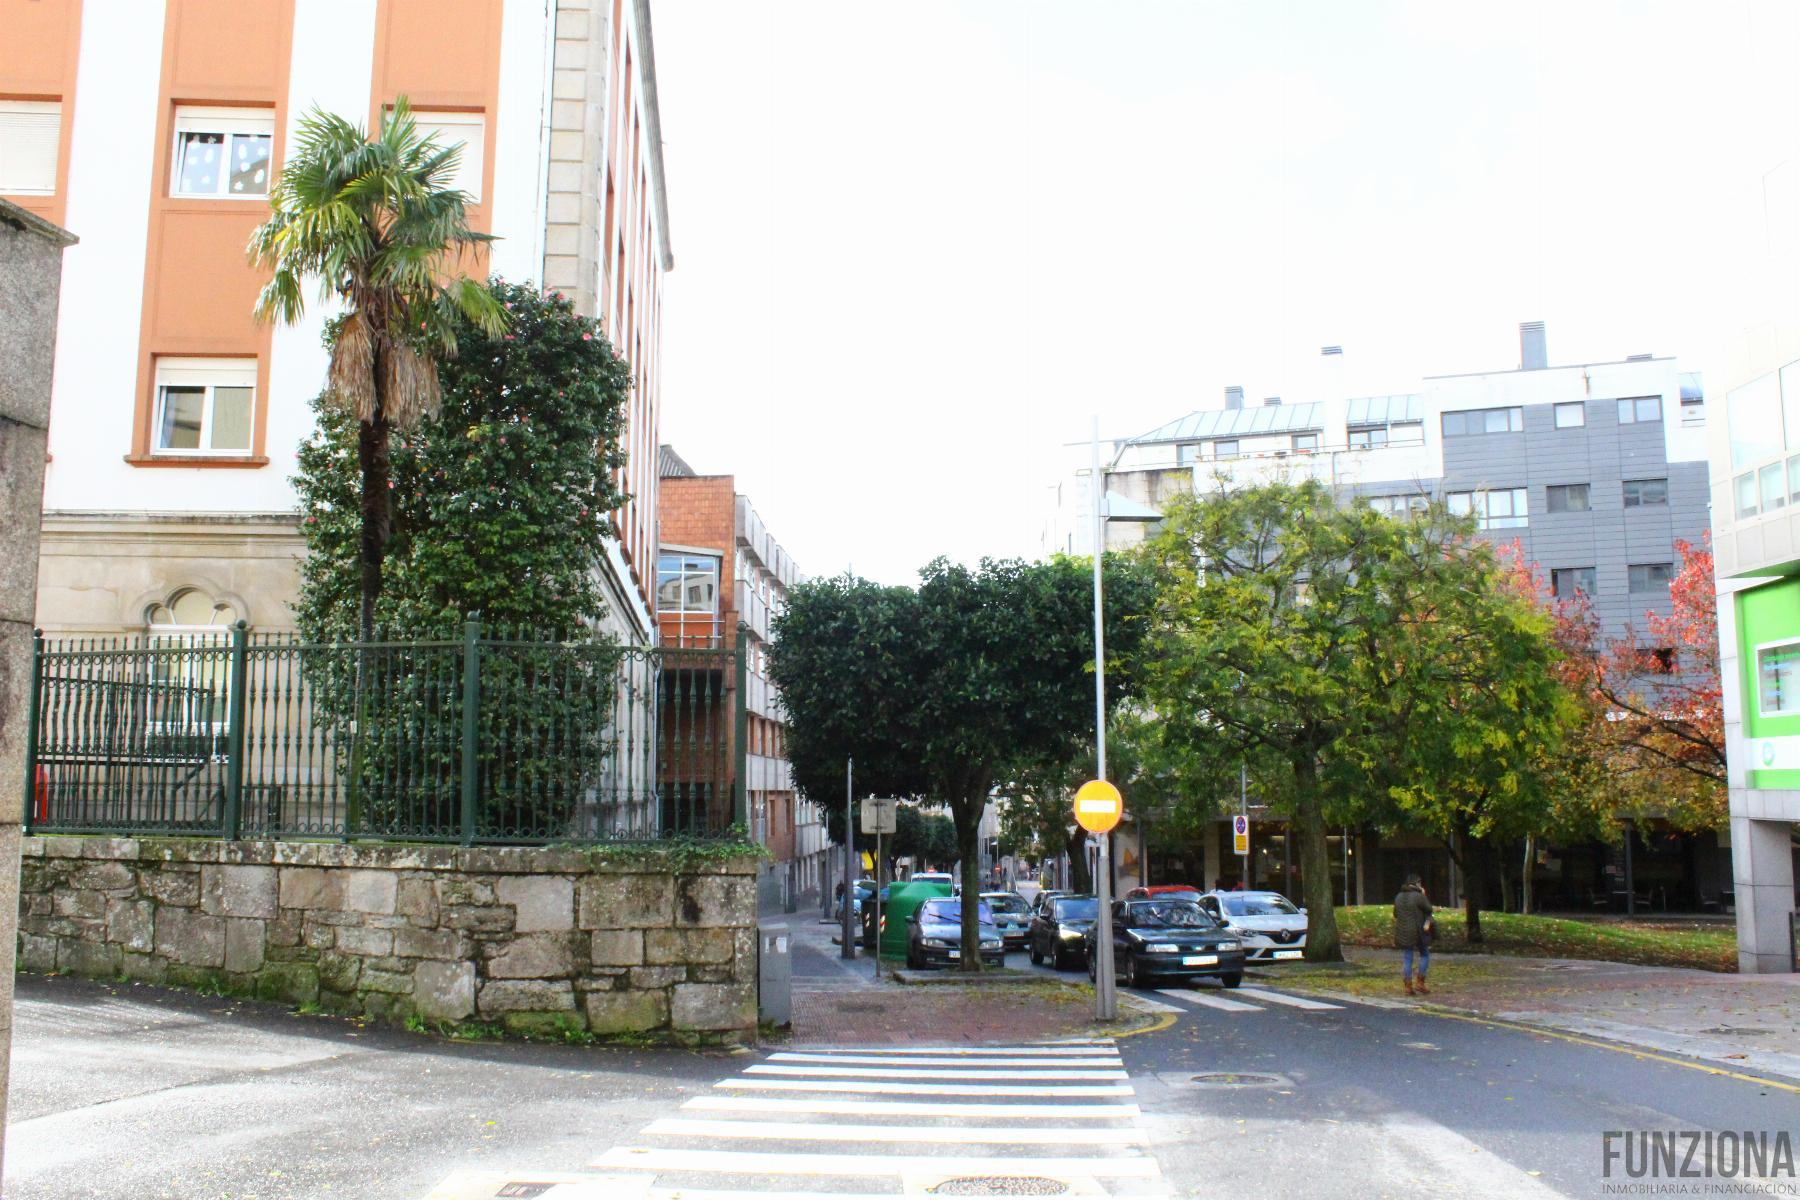 For sale of garage in Pontevedra